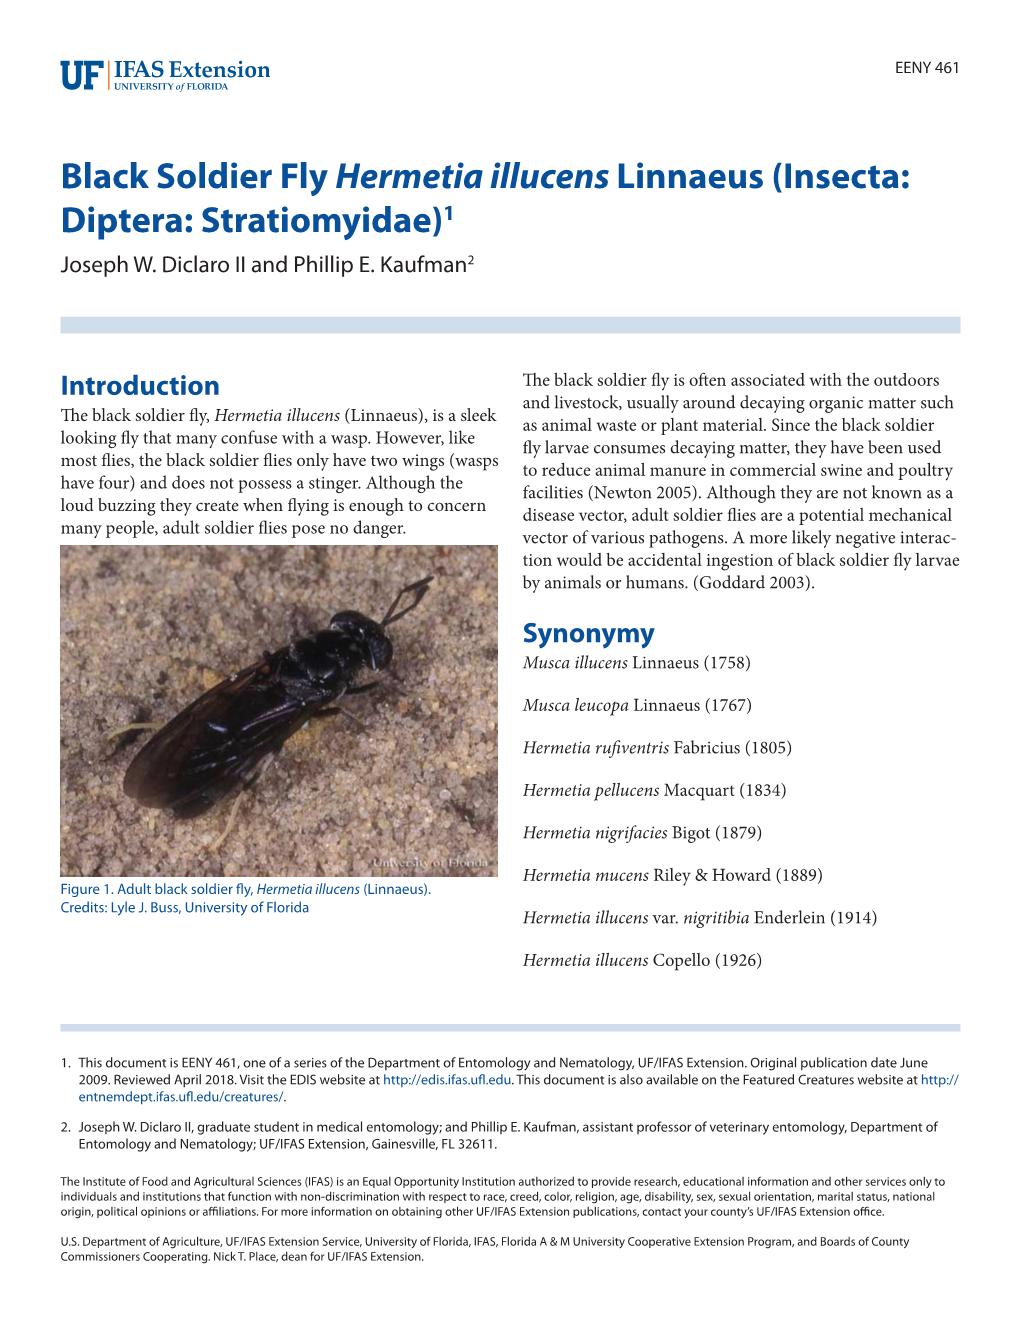 Black Soldier Fly Hermetia Illucens Linnaeus (Insecta: Diptera: Stratiomyidae)1 Joseph W